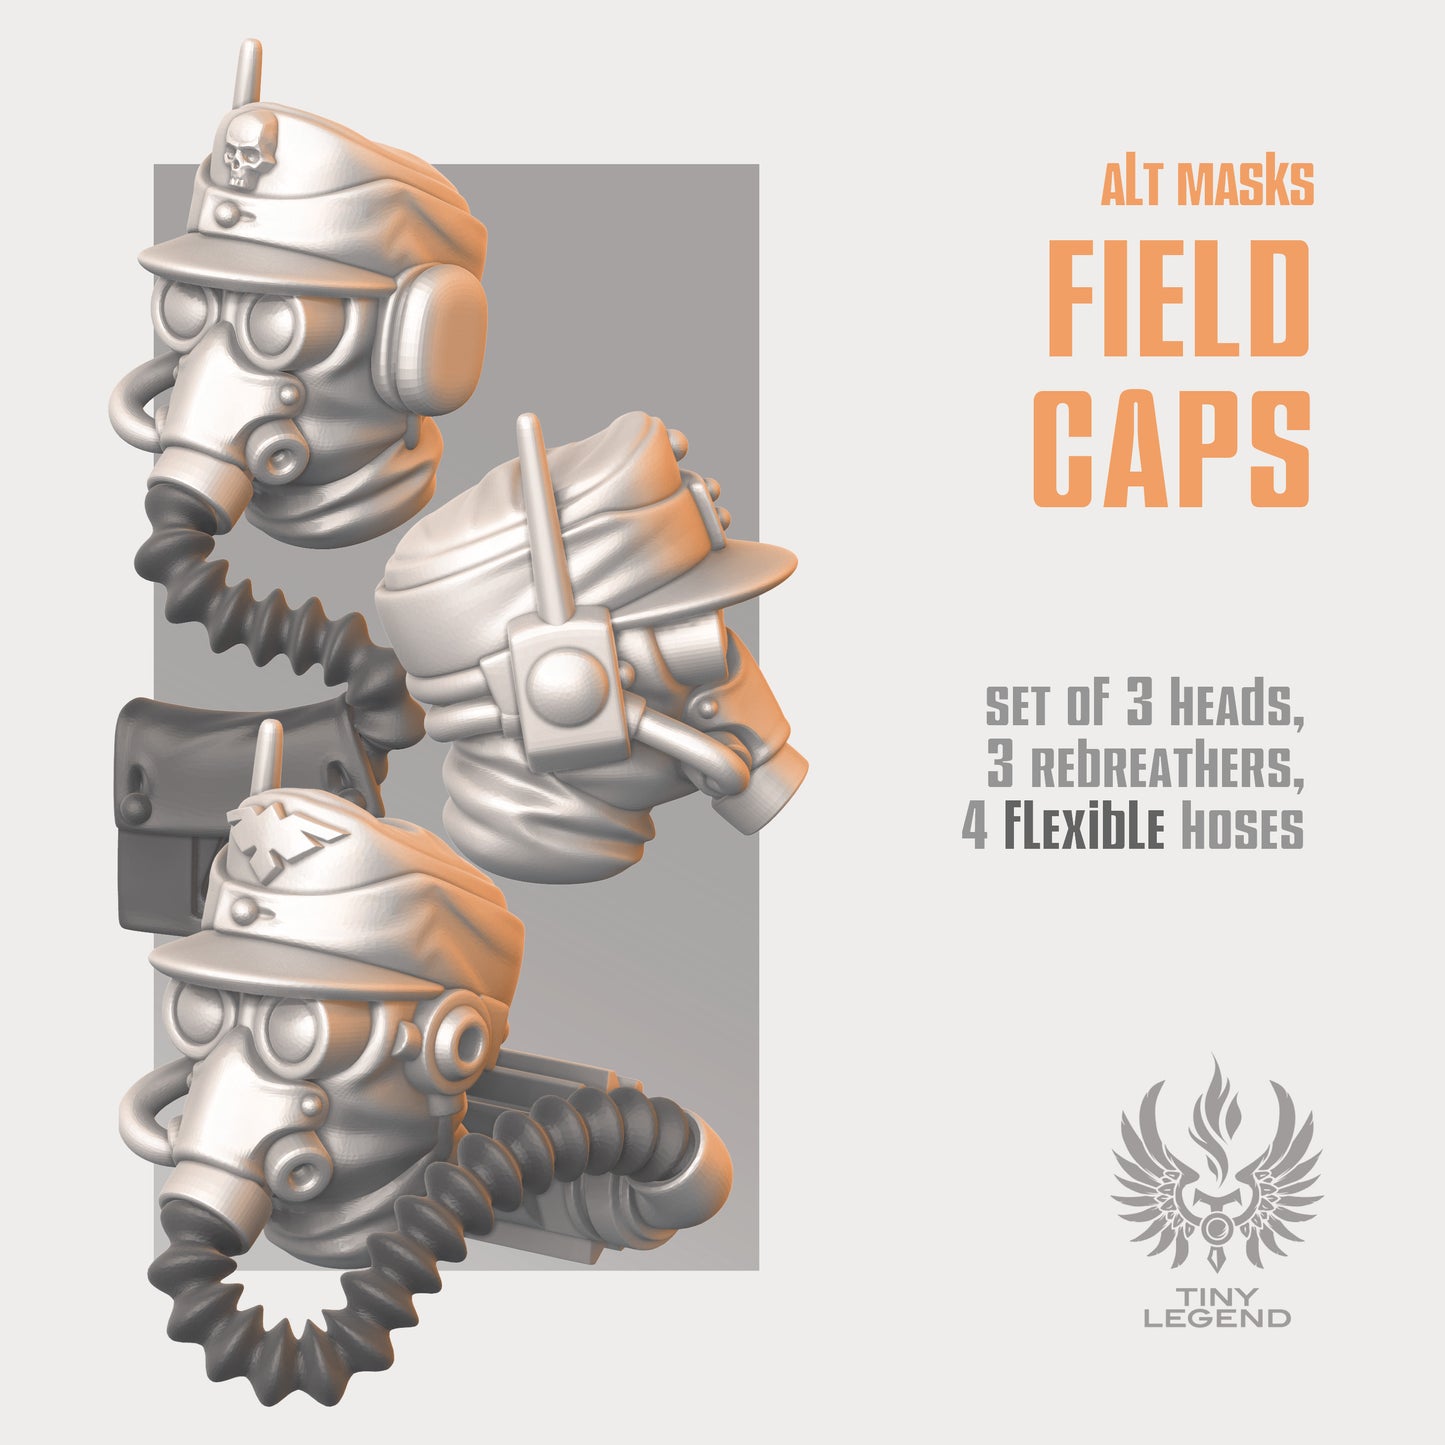 Field Caps - Alt masks